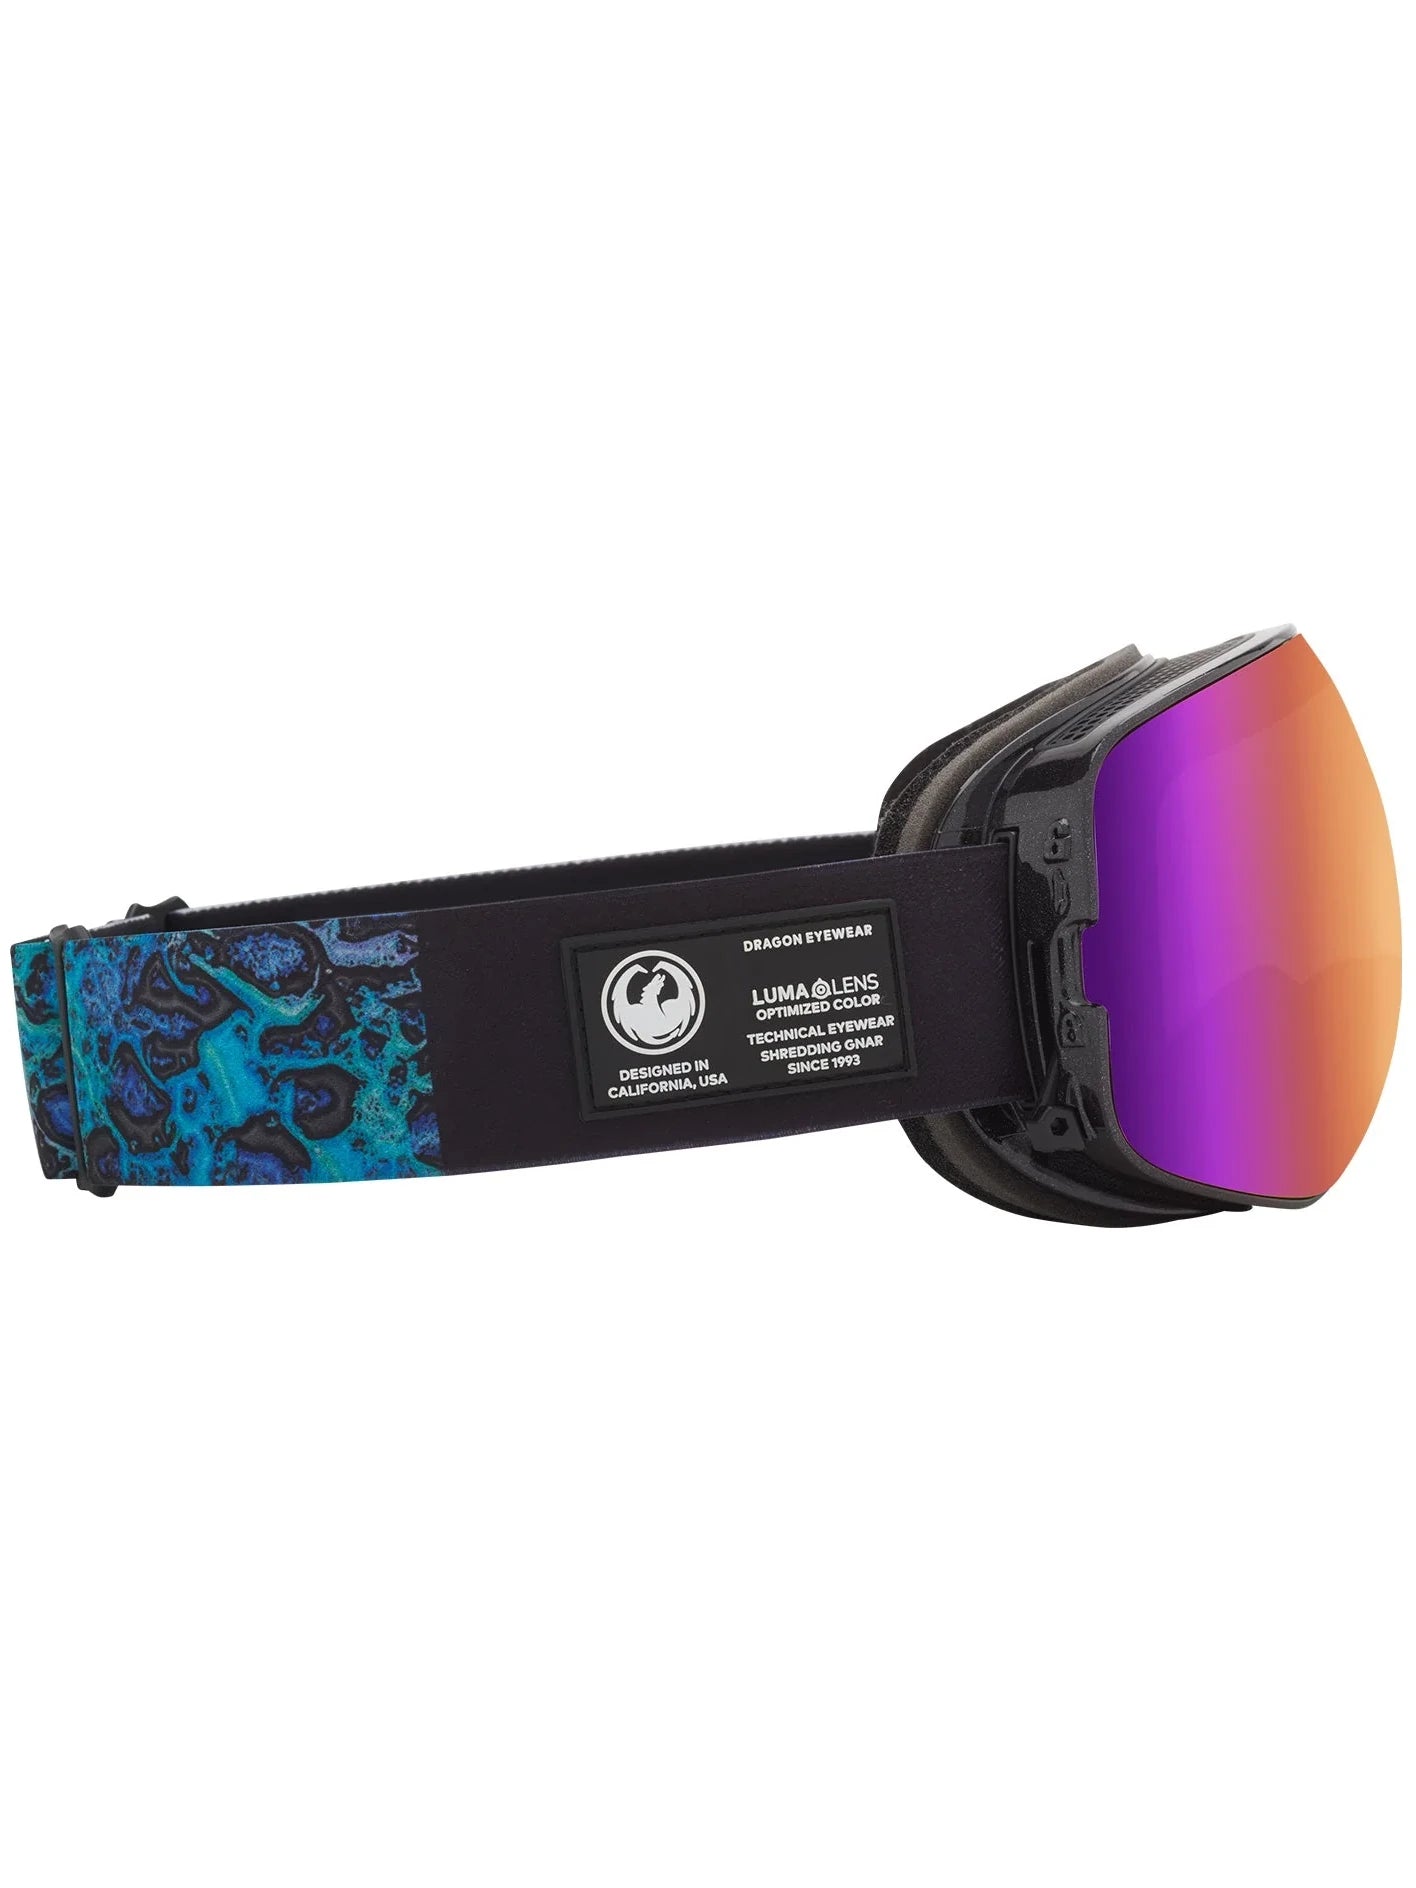 Dragon X2s - Black Pearl with Lumalens Purple Ionized & Lumalens Amber Lens